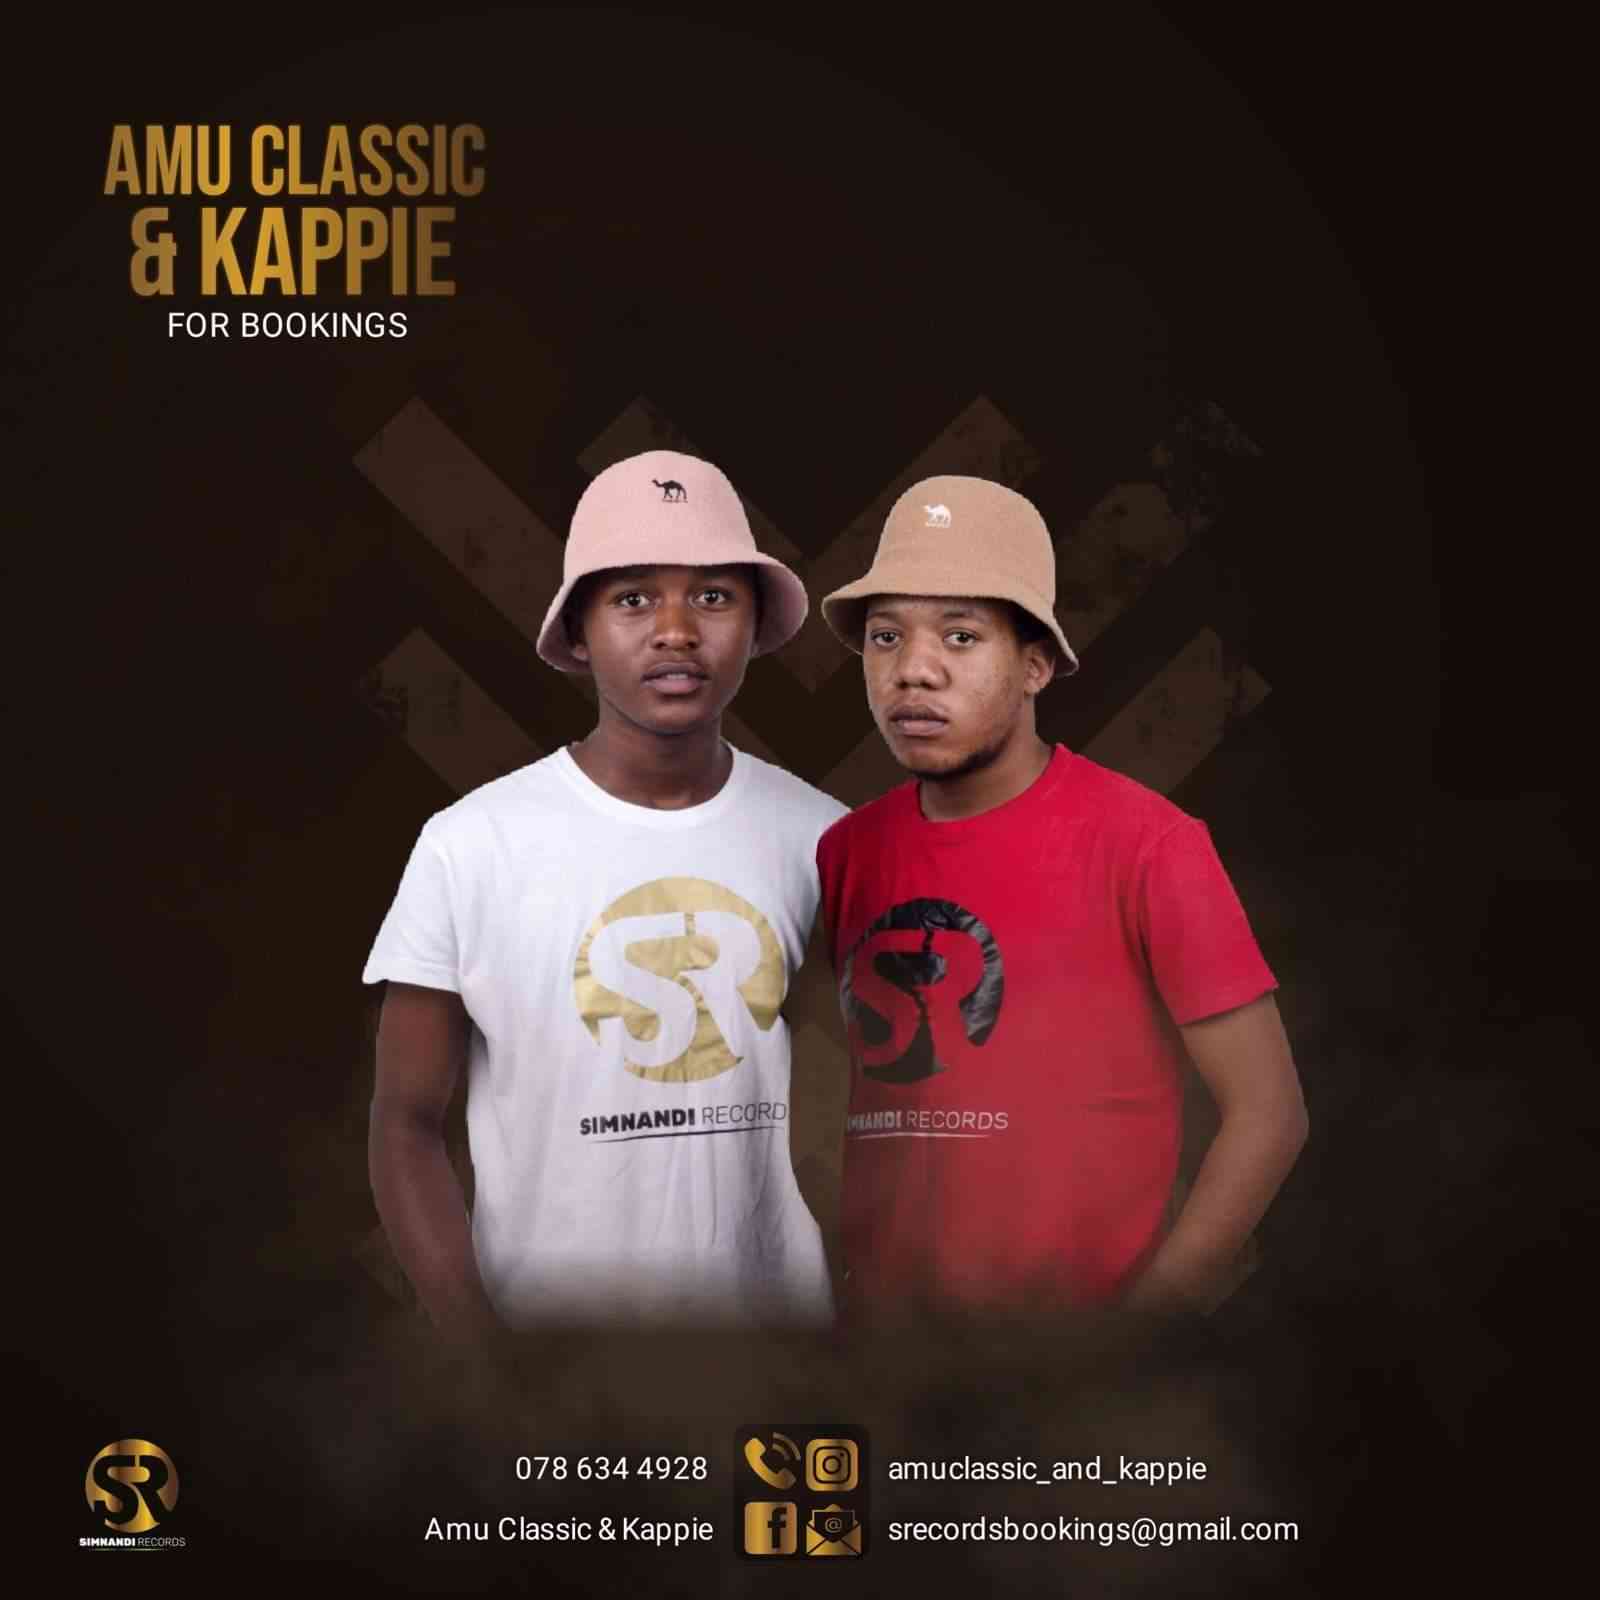 Amu Classic & Kappie